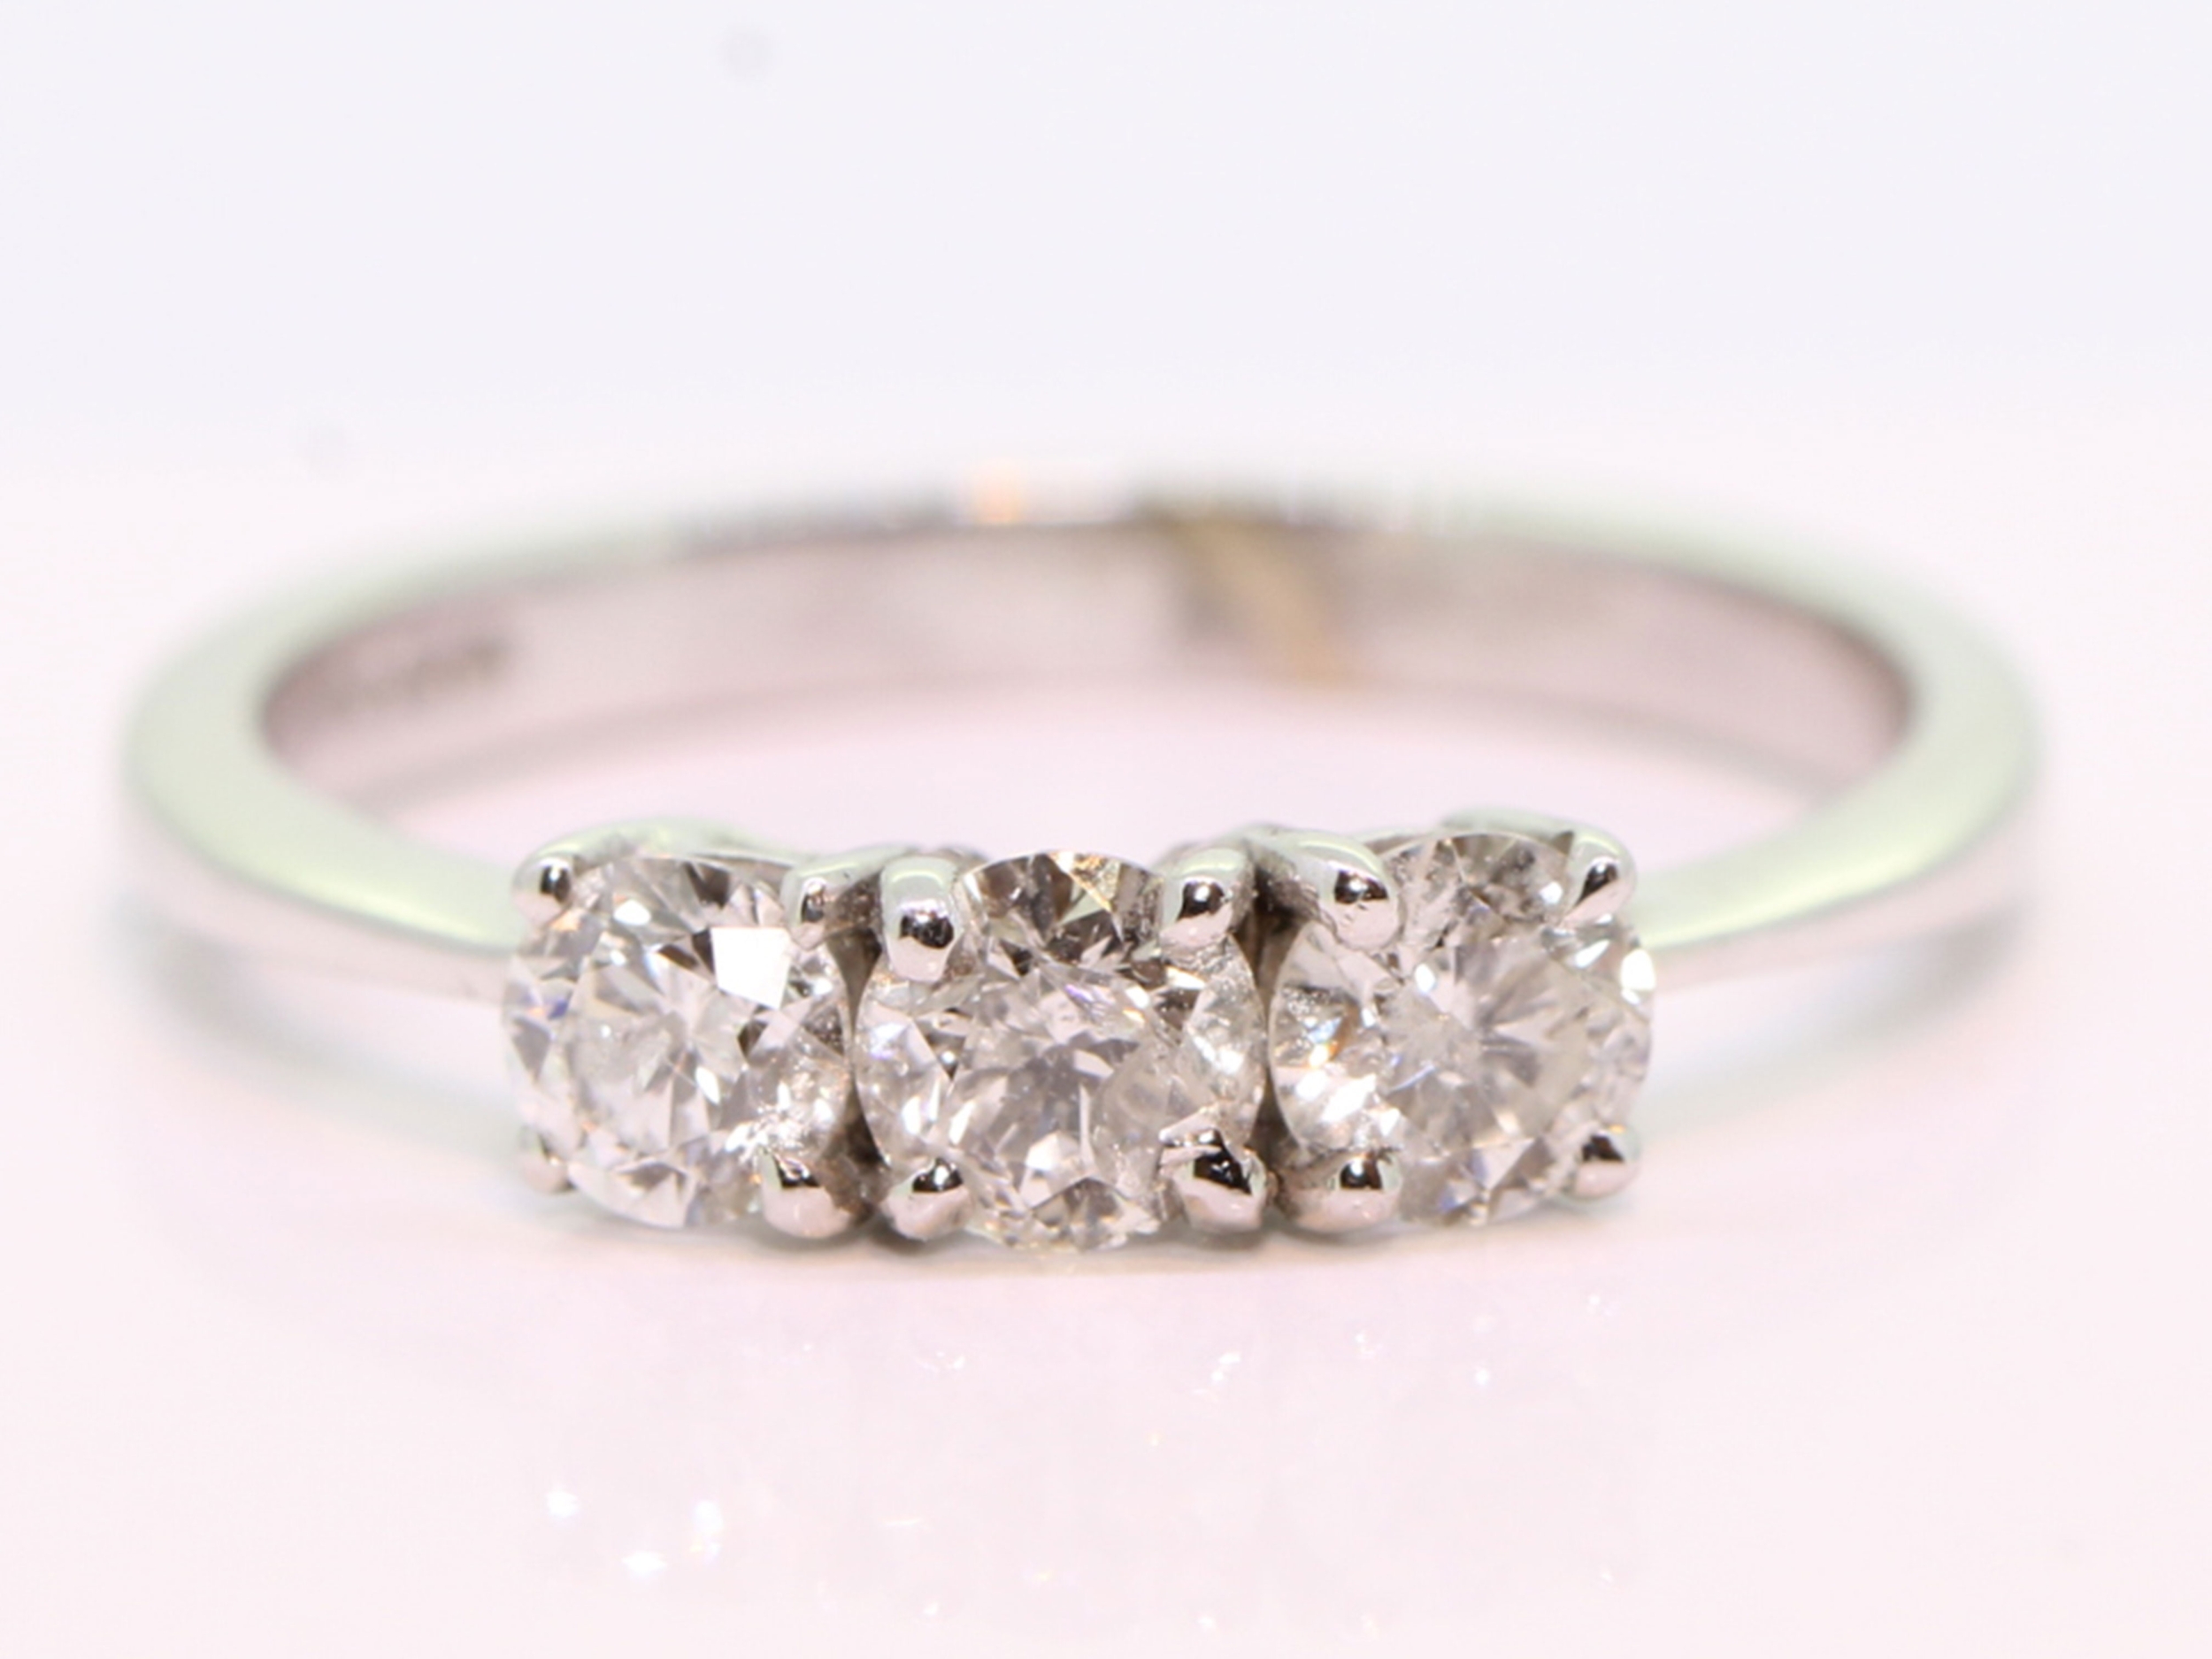 Exquisite 9ct gold diamond trilogy ring